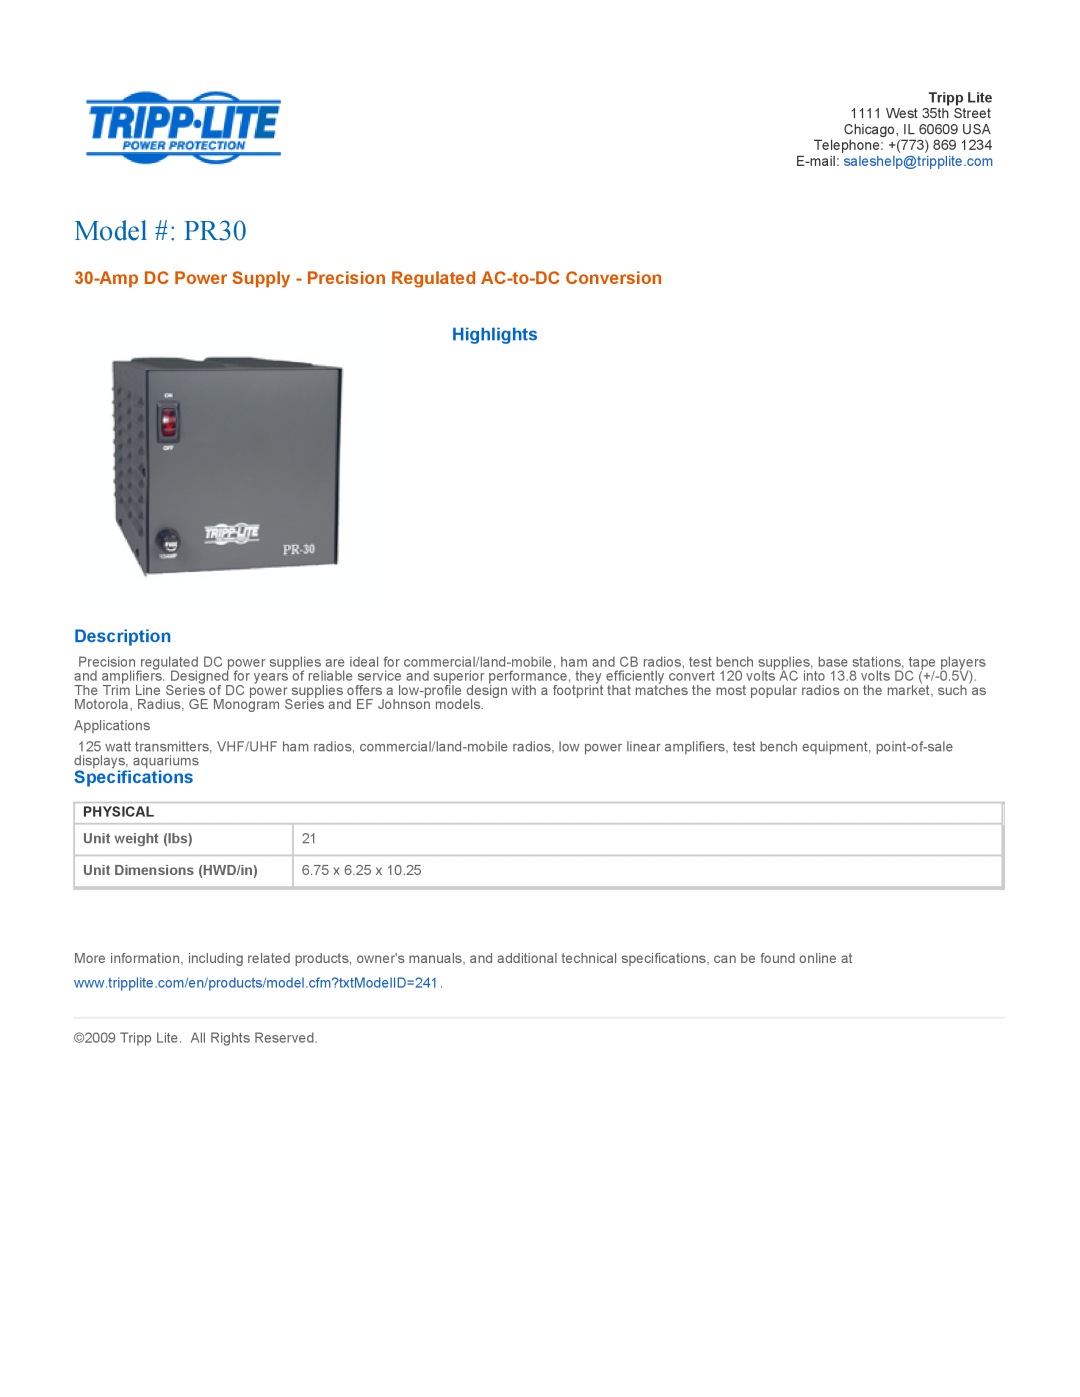 Tripp Lite PR 30 specifications Model # PR30, Amp DC Power Supply - Precision Regulated AC-to-DC Conversion, Tripp Lite 